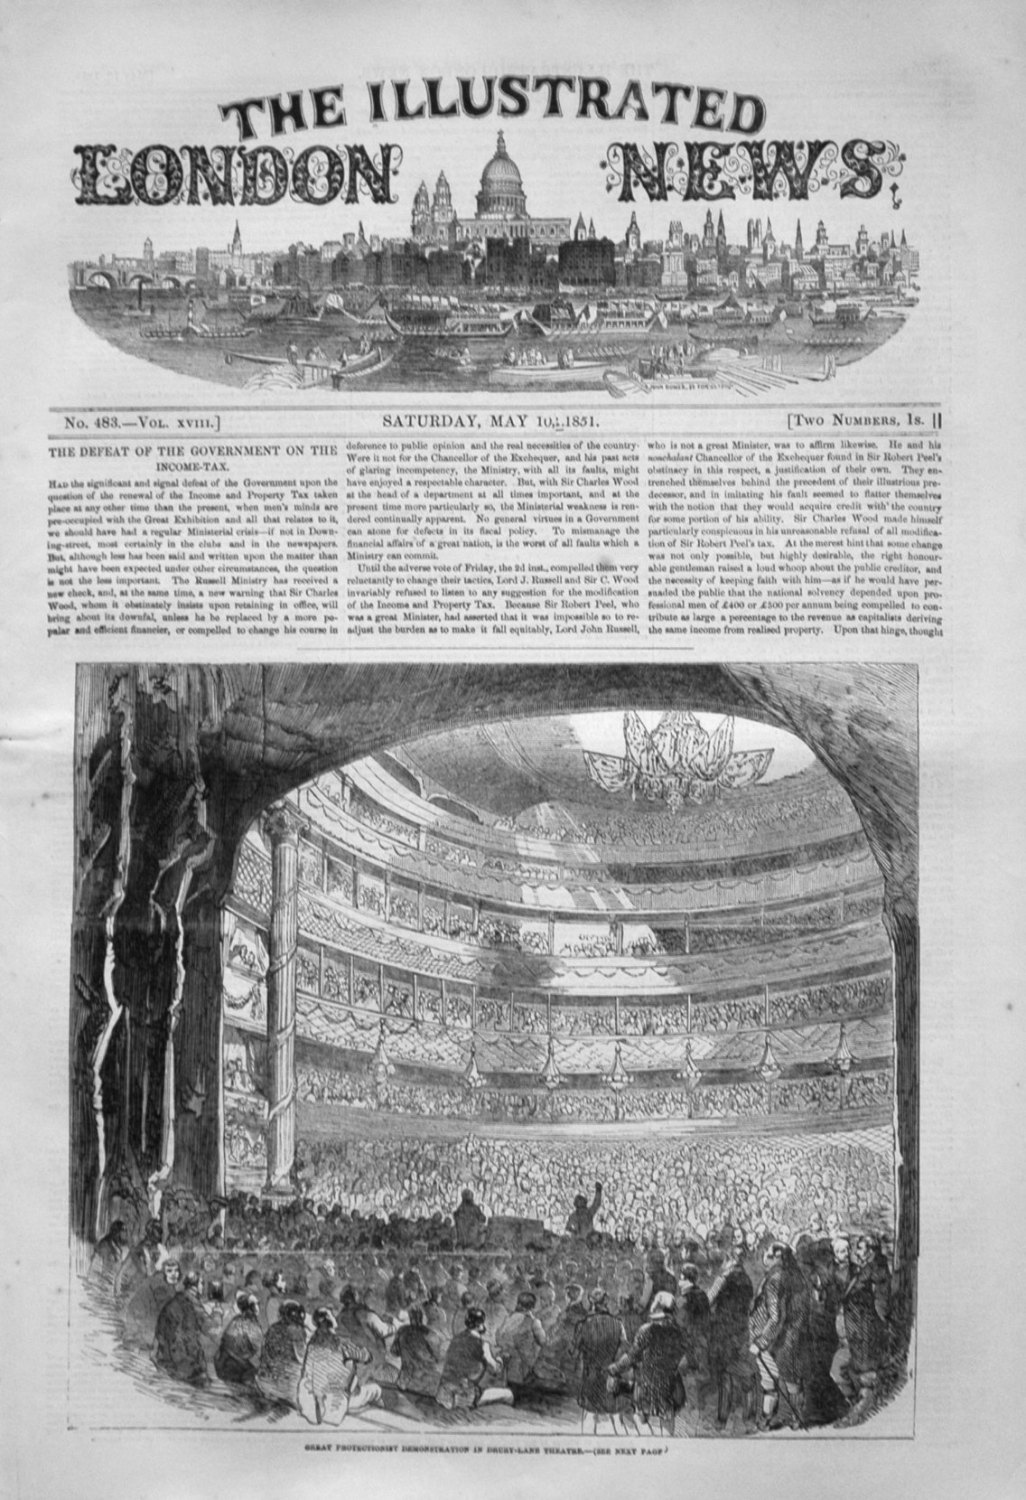 Illustrated London News May 10th 1851.